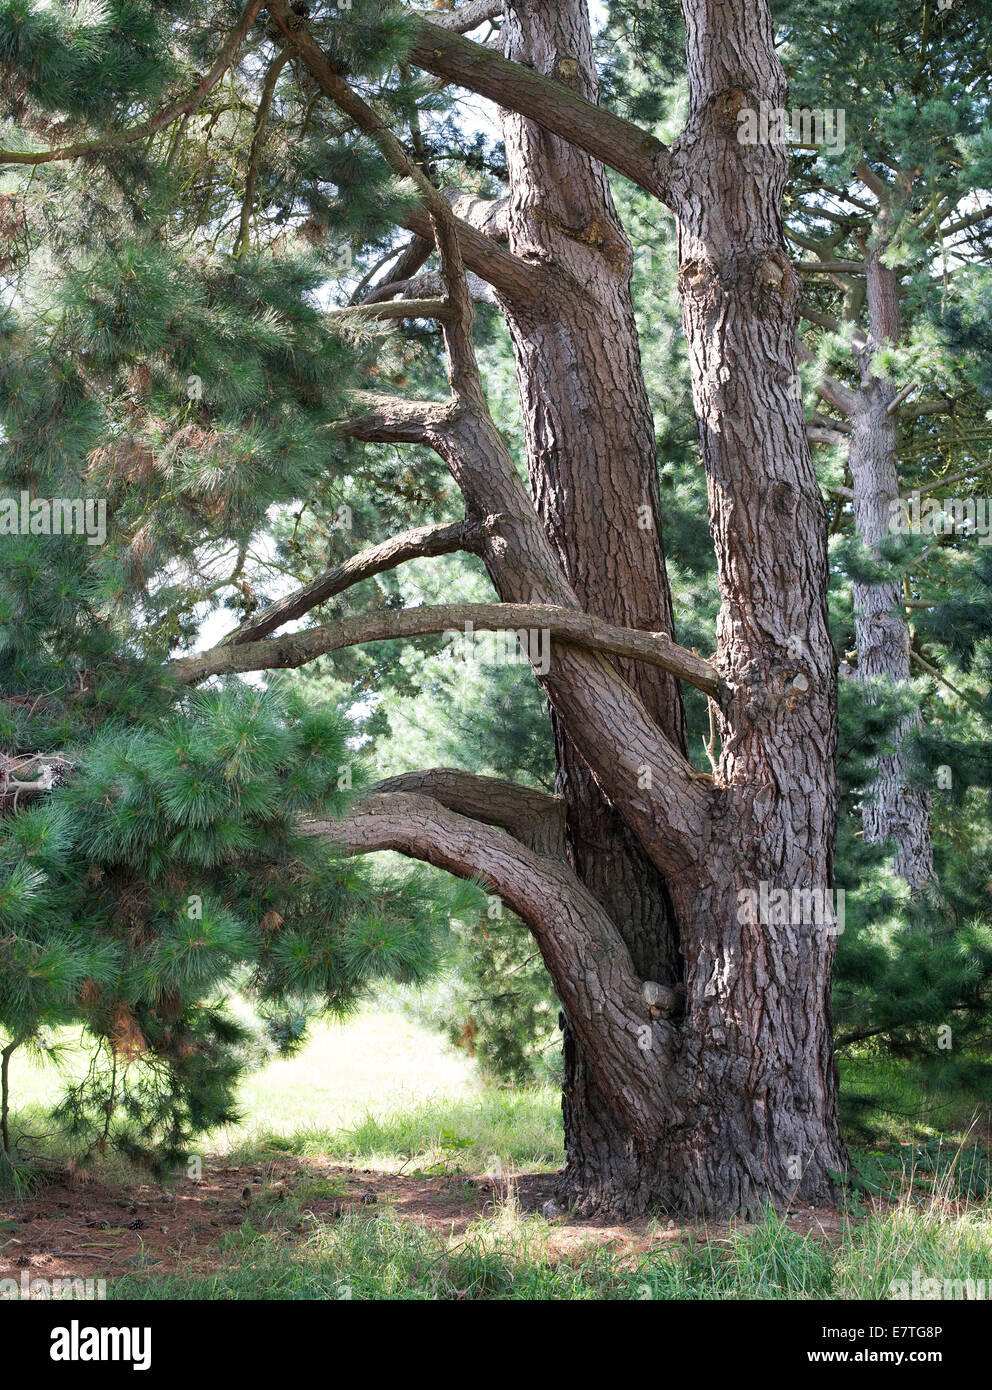 Pinus Sylvestris. Scots pine tree in the English countryside Stock Photo